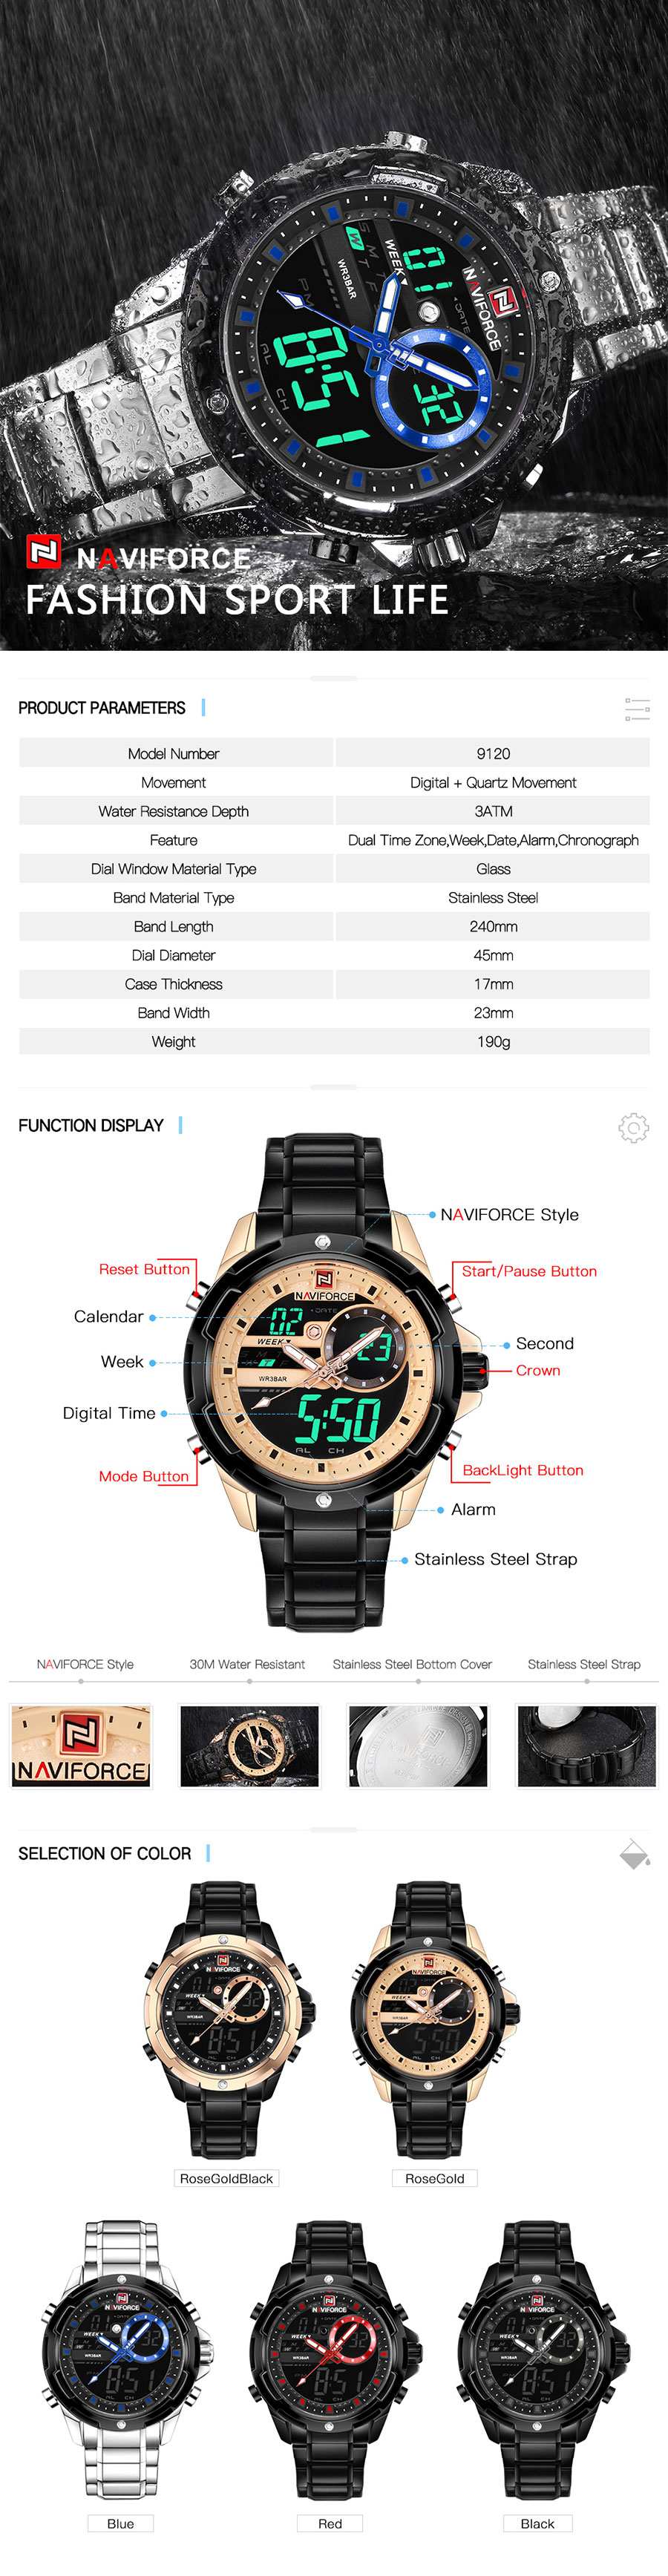 NAVIFORCE-9120-Male-Dual-Display-Digital-Watch-Luminous-Calendar-Alarm-Fashion-Outdoor-Watch-1314388